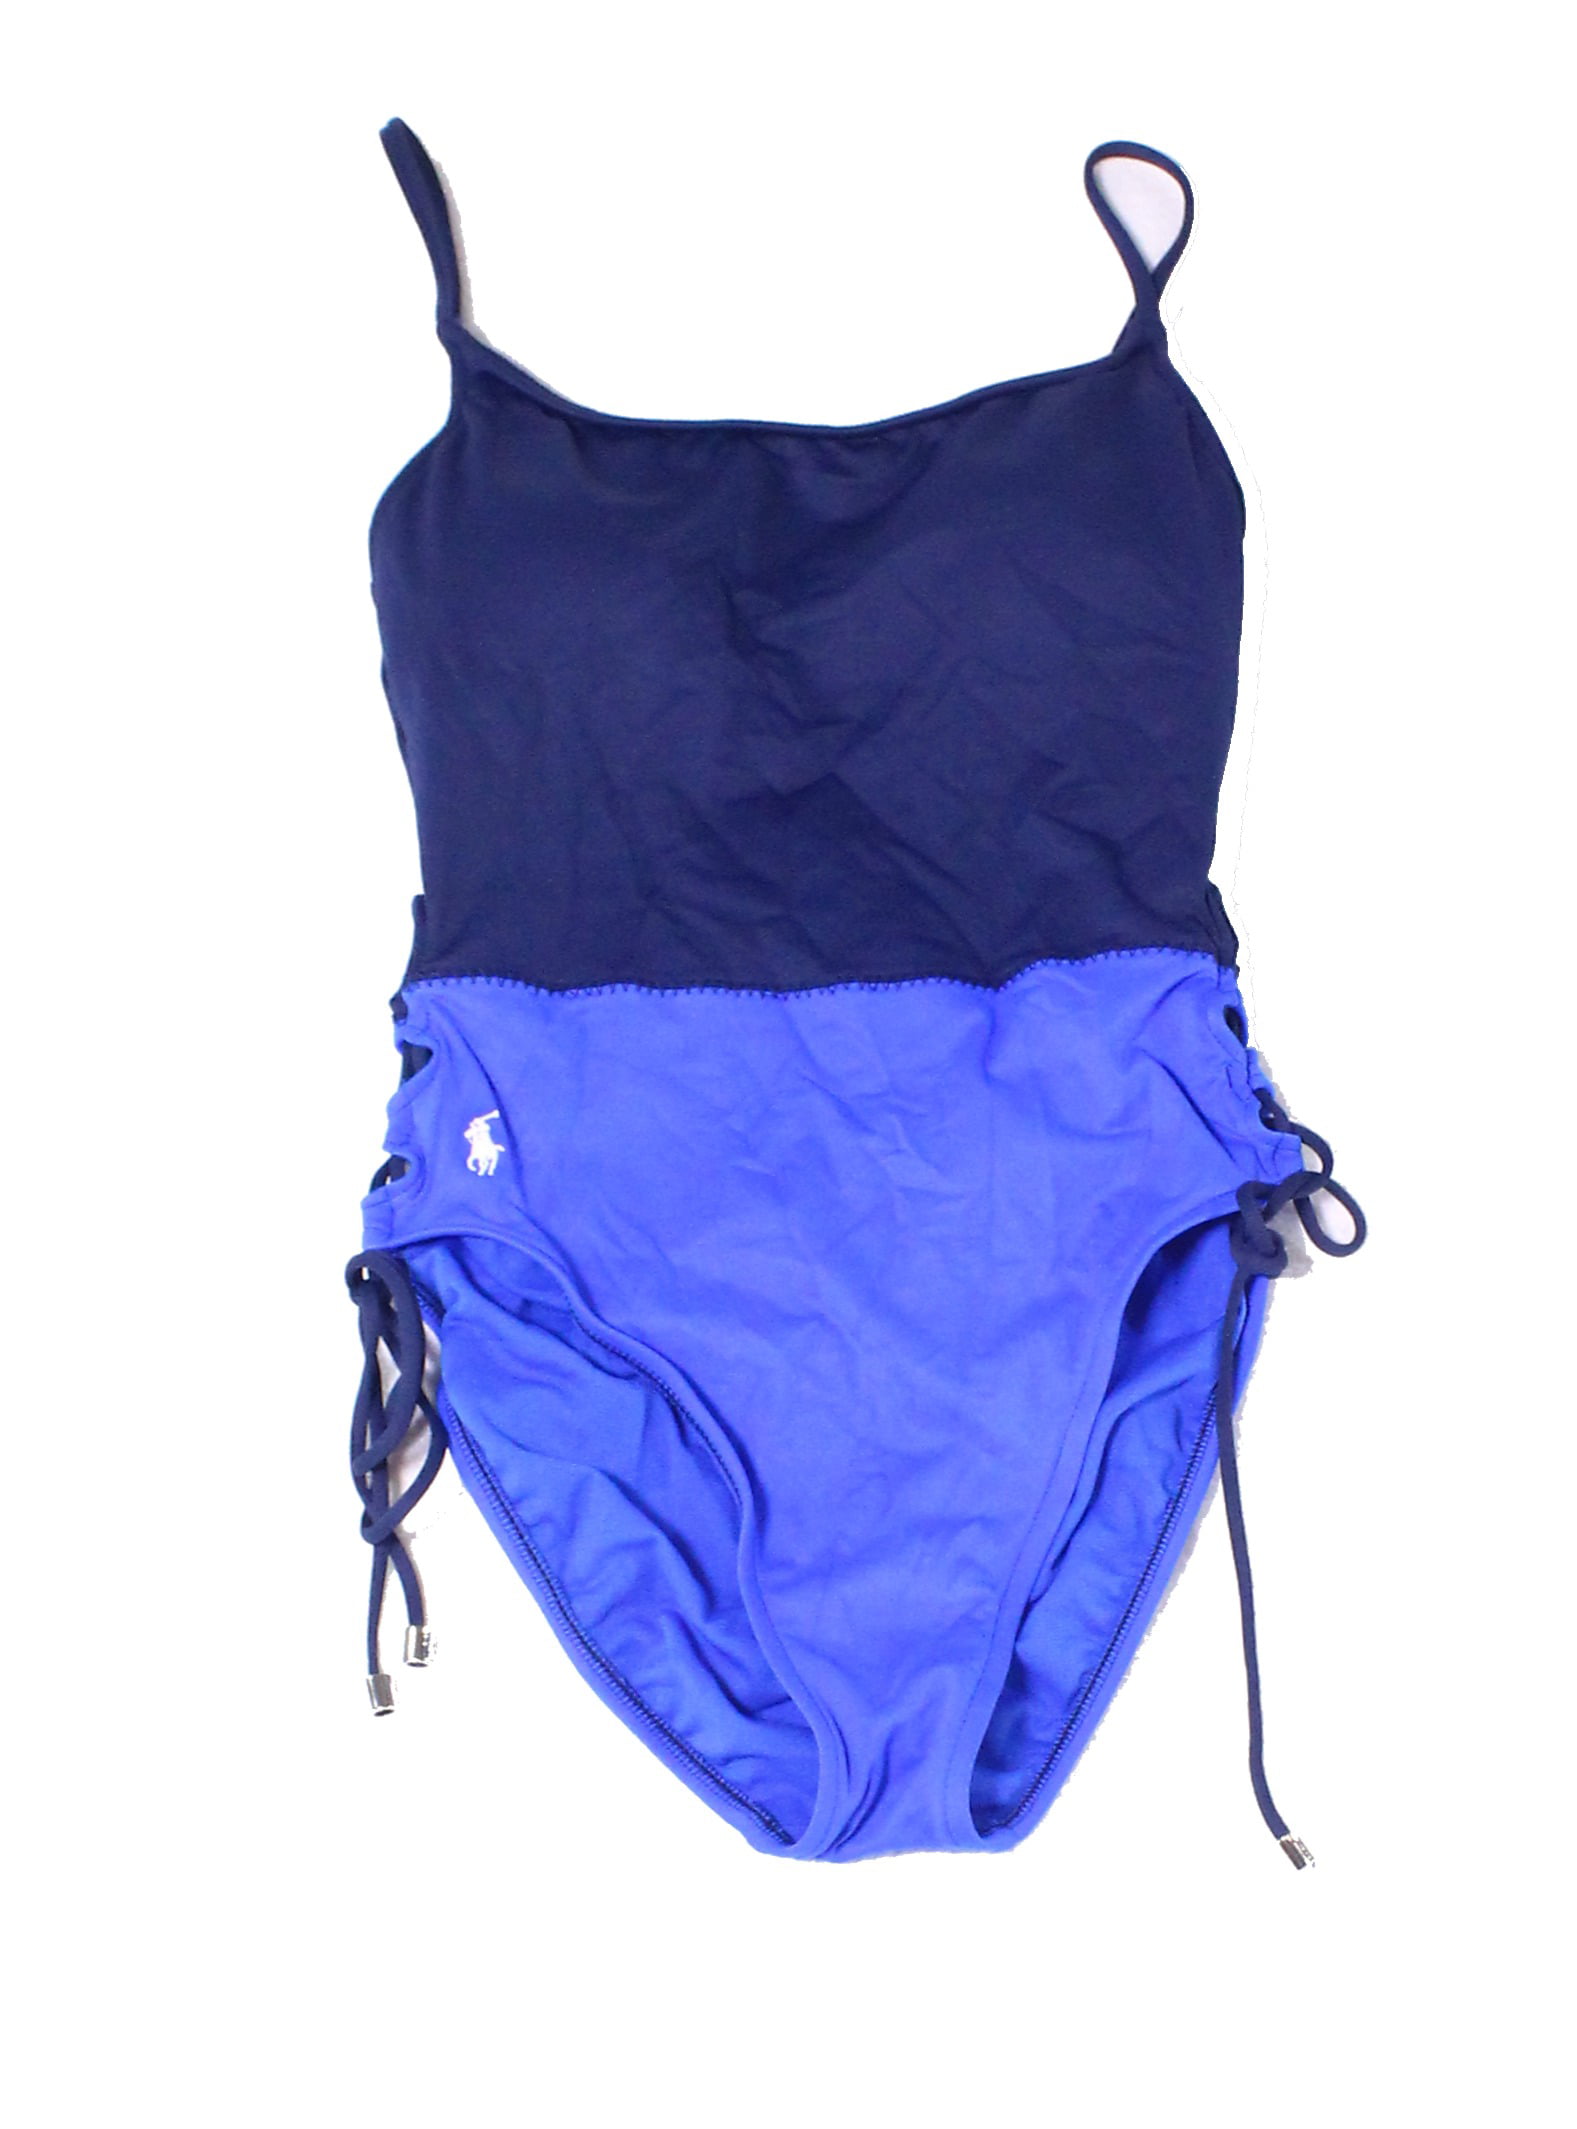 Polo Ralph Lauren - Womens Small One-Piece Swimwear S - Walmart.com ...